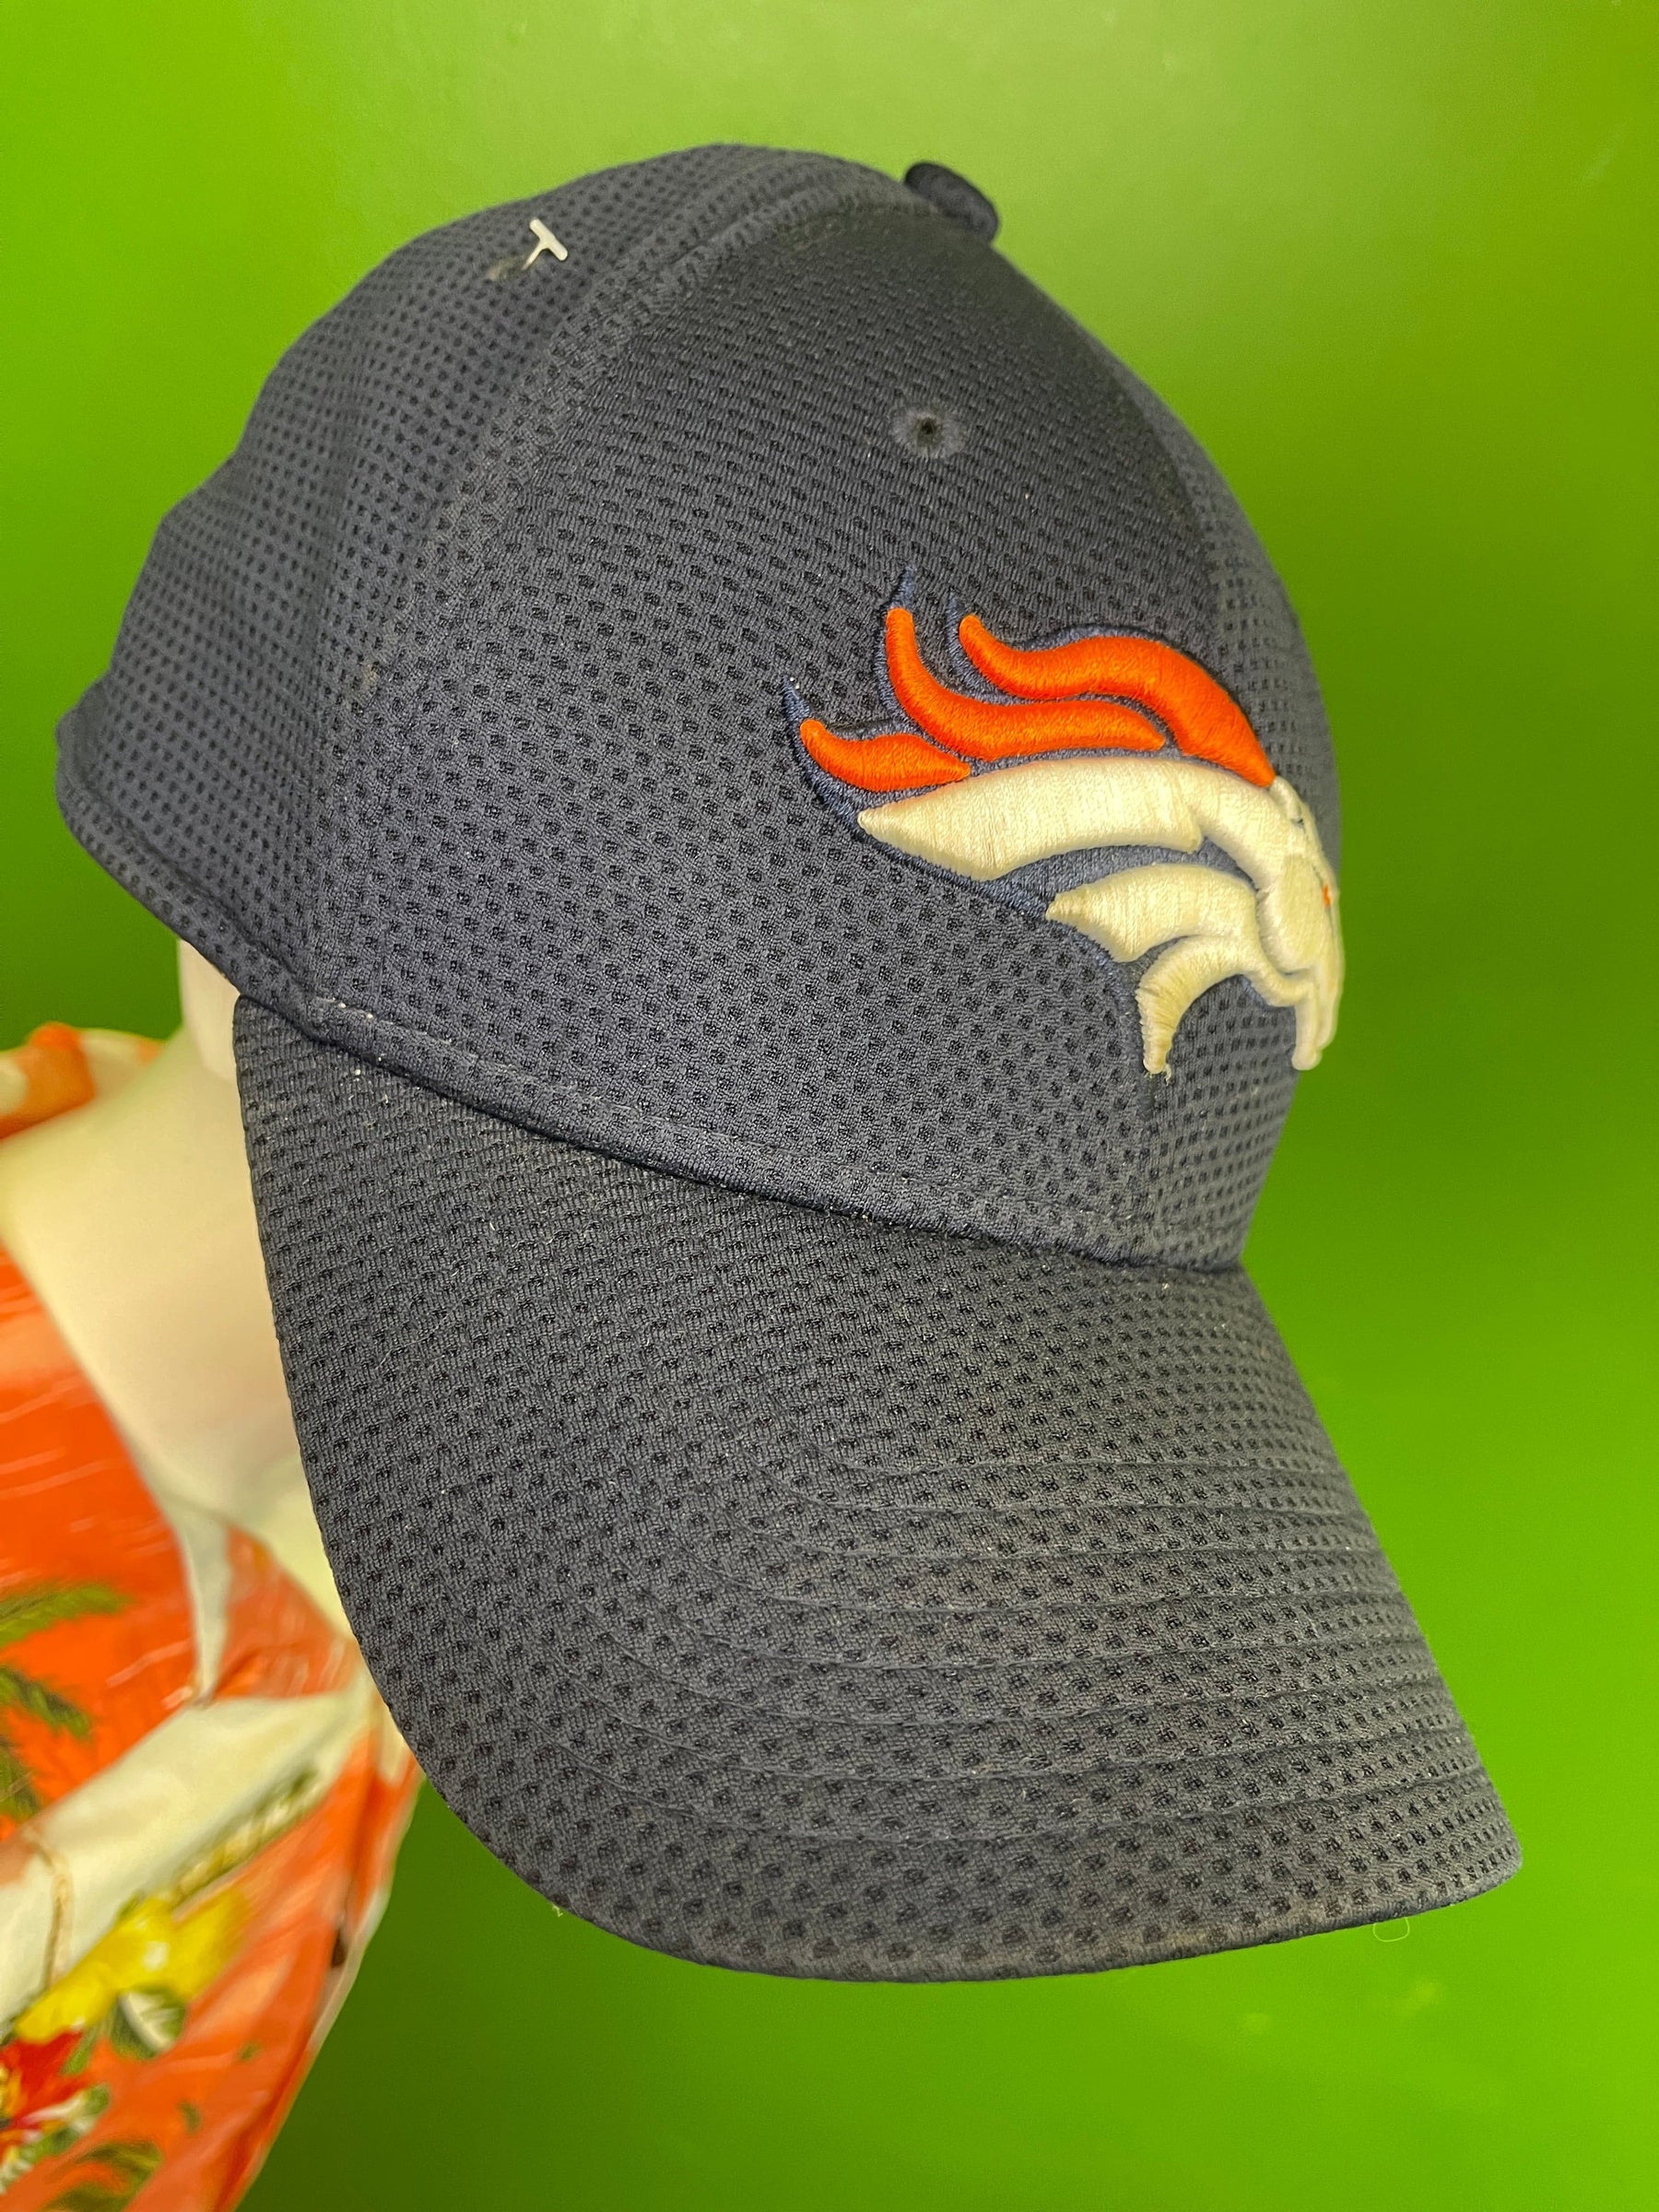 NFL Denver Broncos New Era 39THIRTY Baseball Cap/Hat Medium/Large